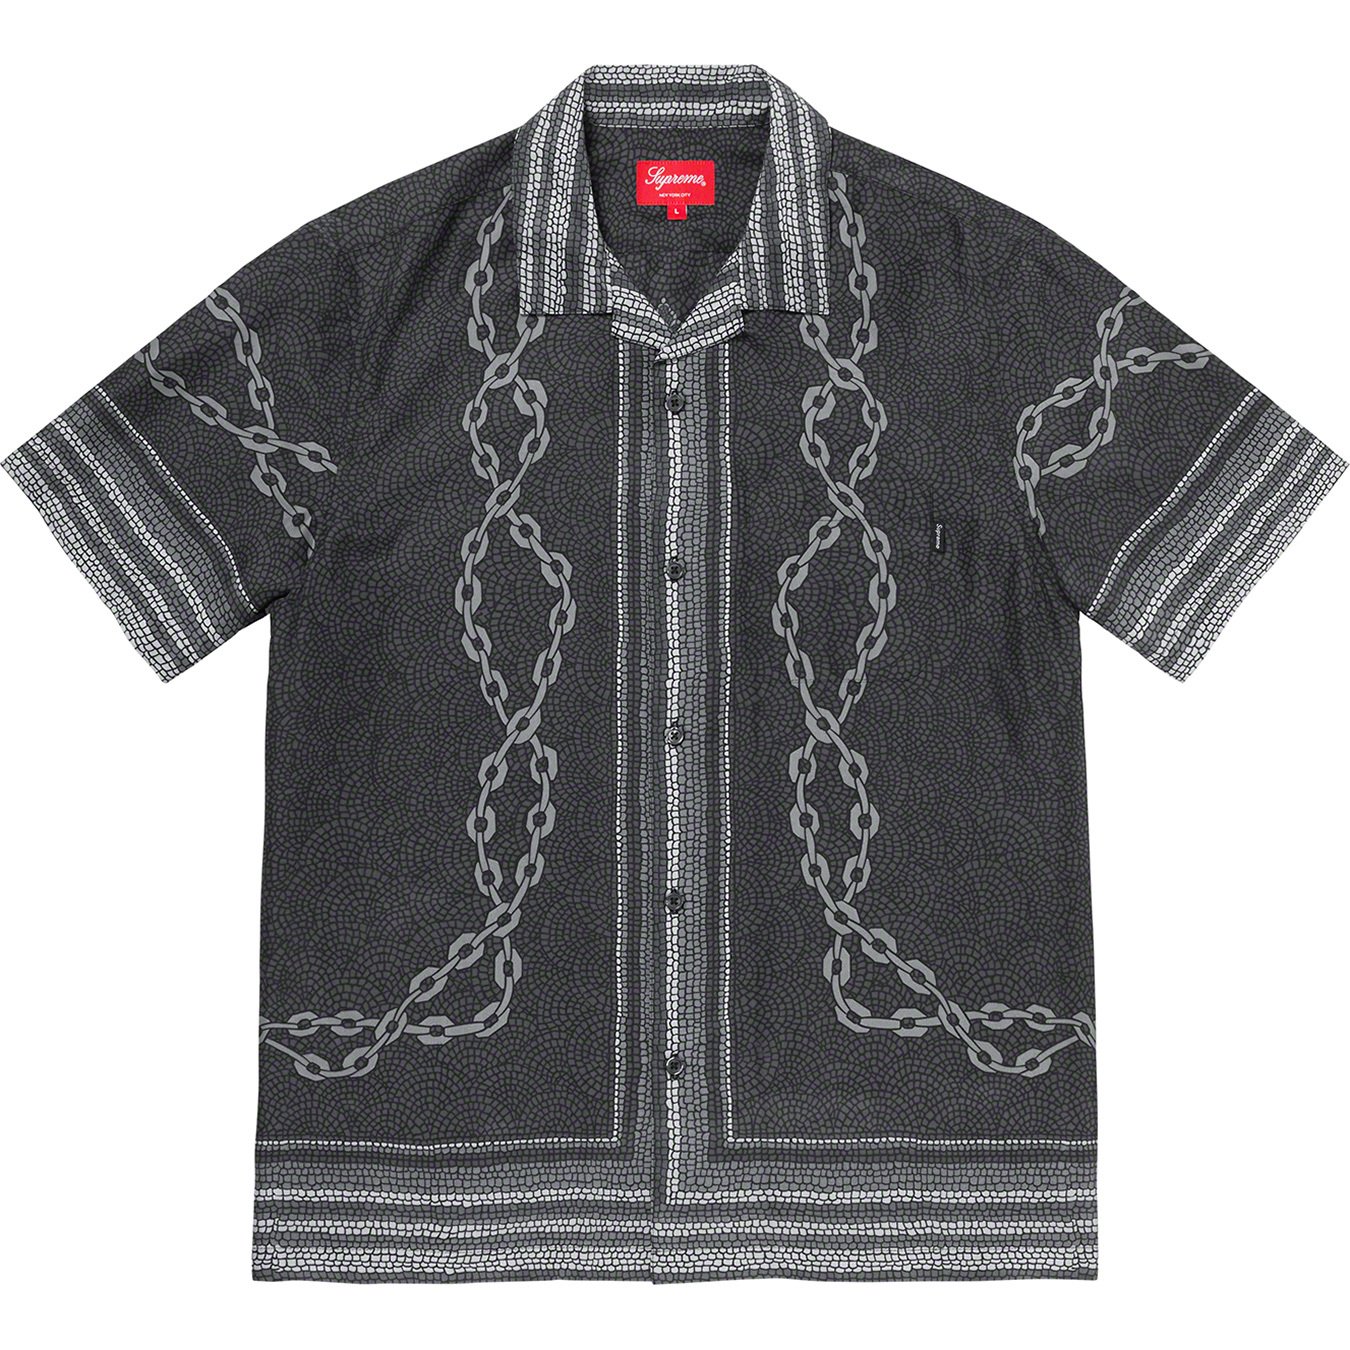 Mosaic Silk S/S Shirt - Supreme Community